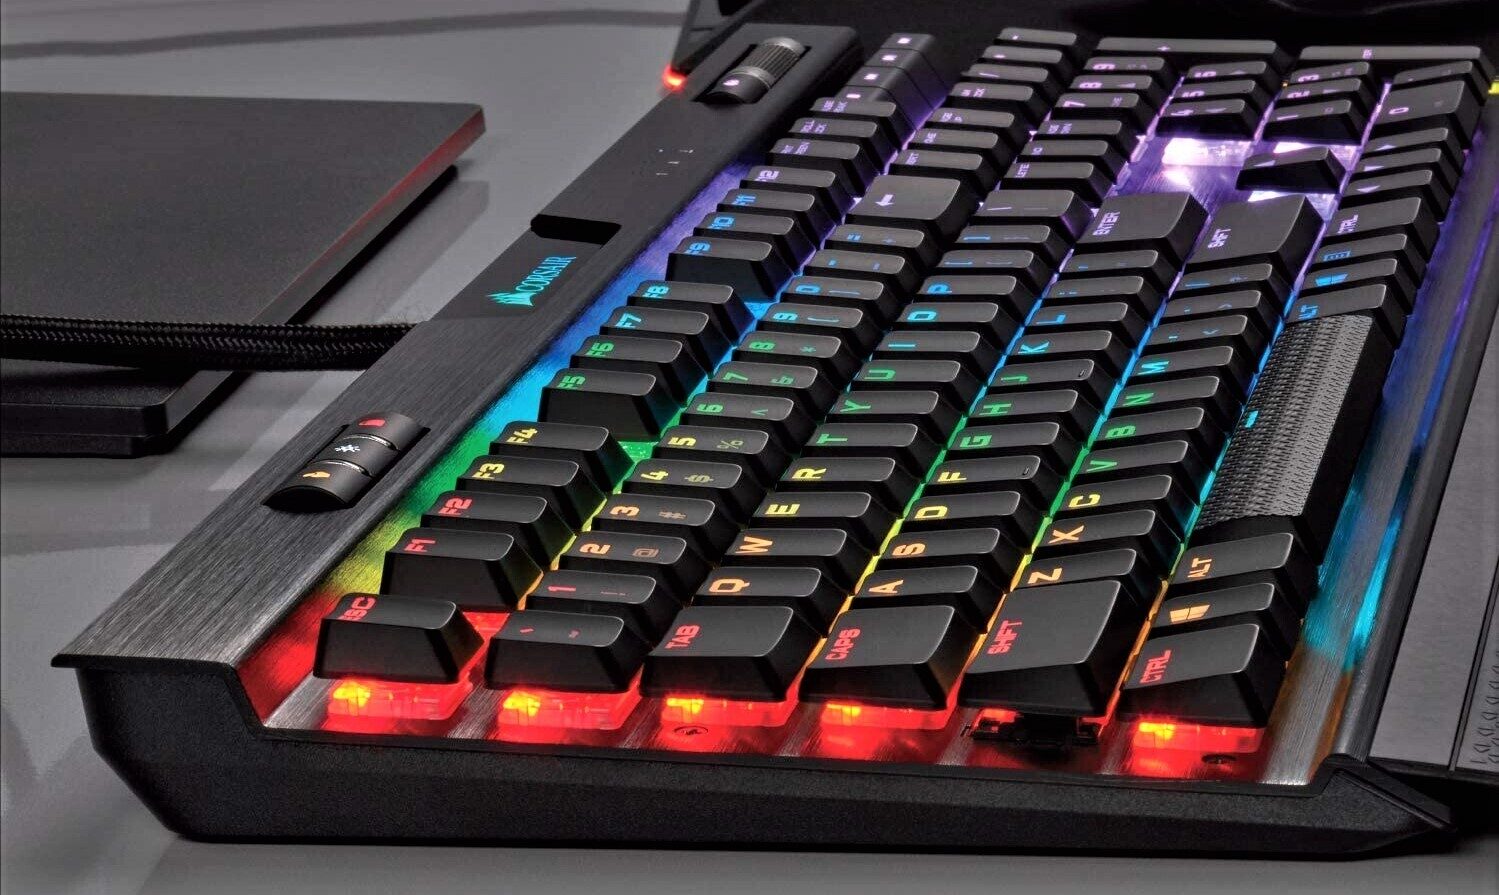 low profile mechanical keyboard- Corsair K70 Low Profile keyboard